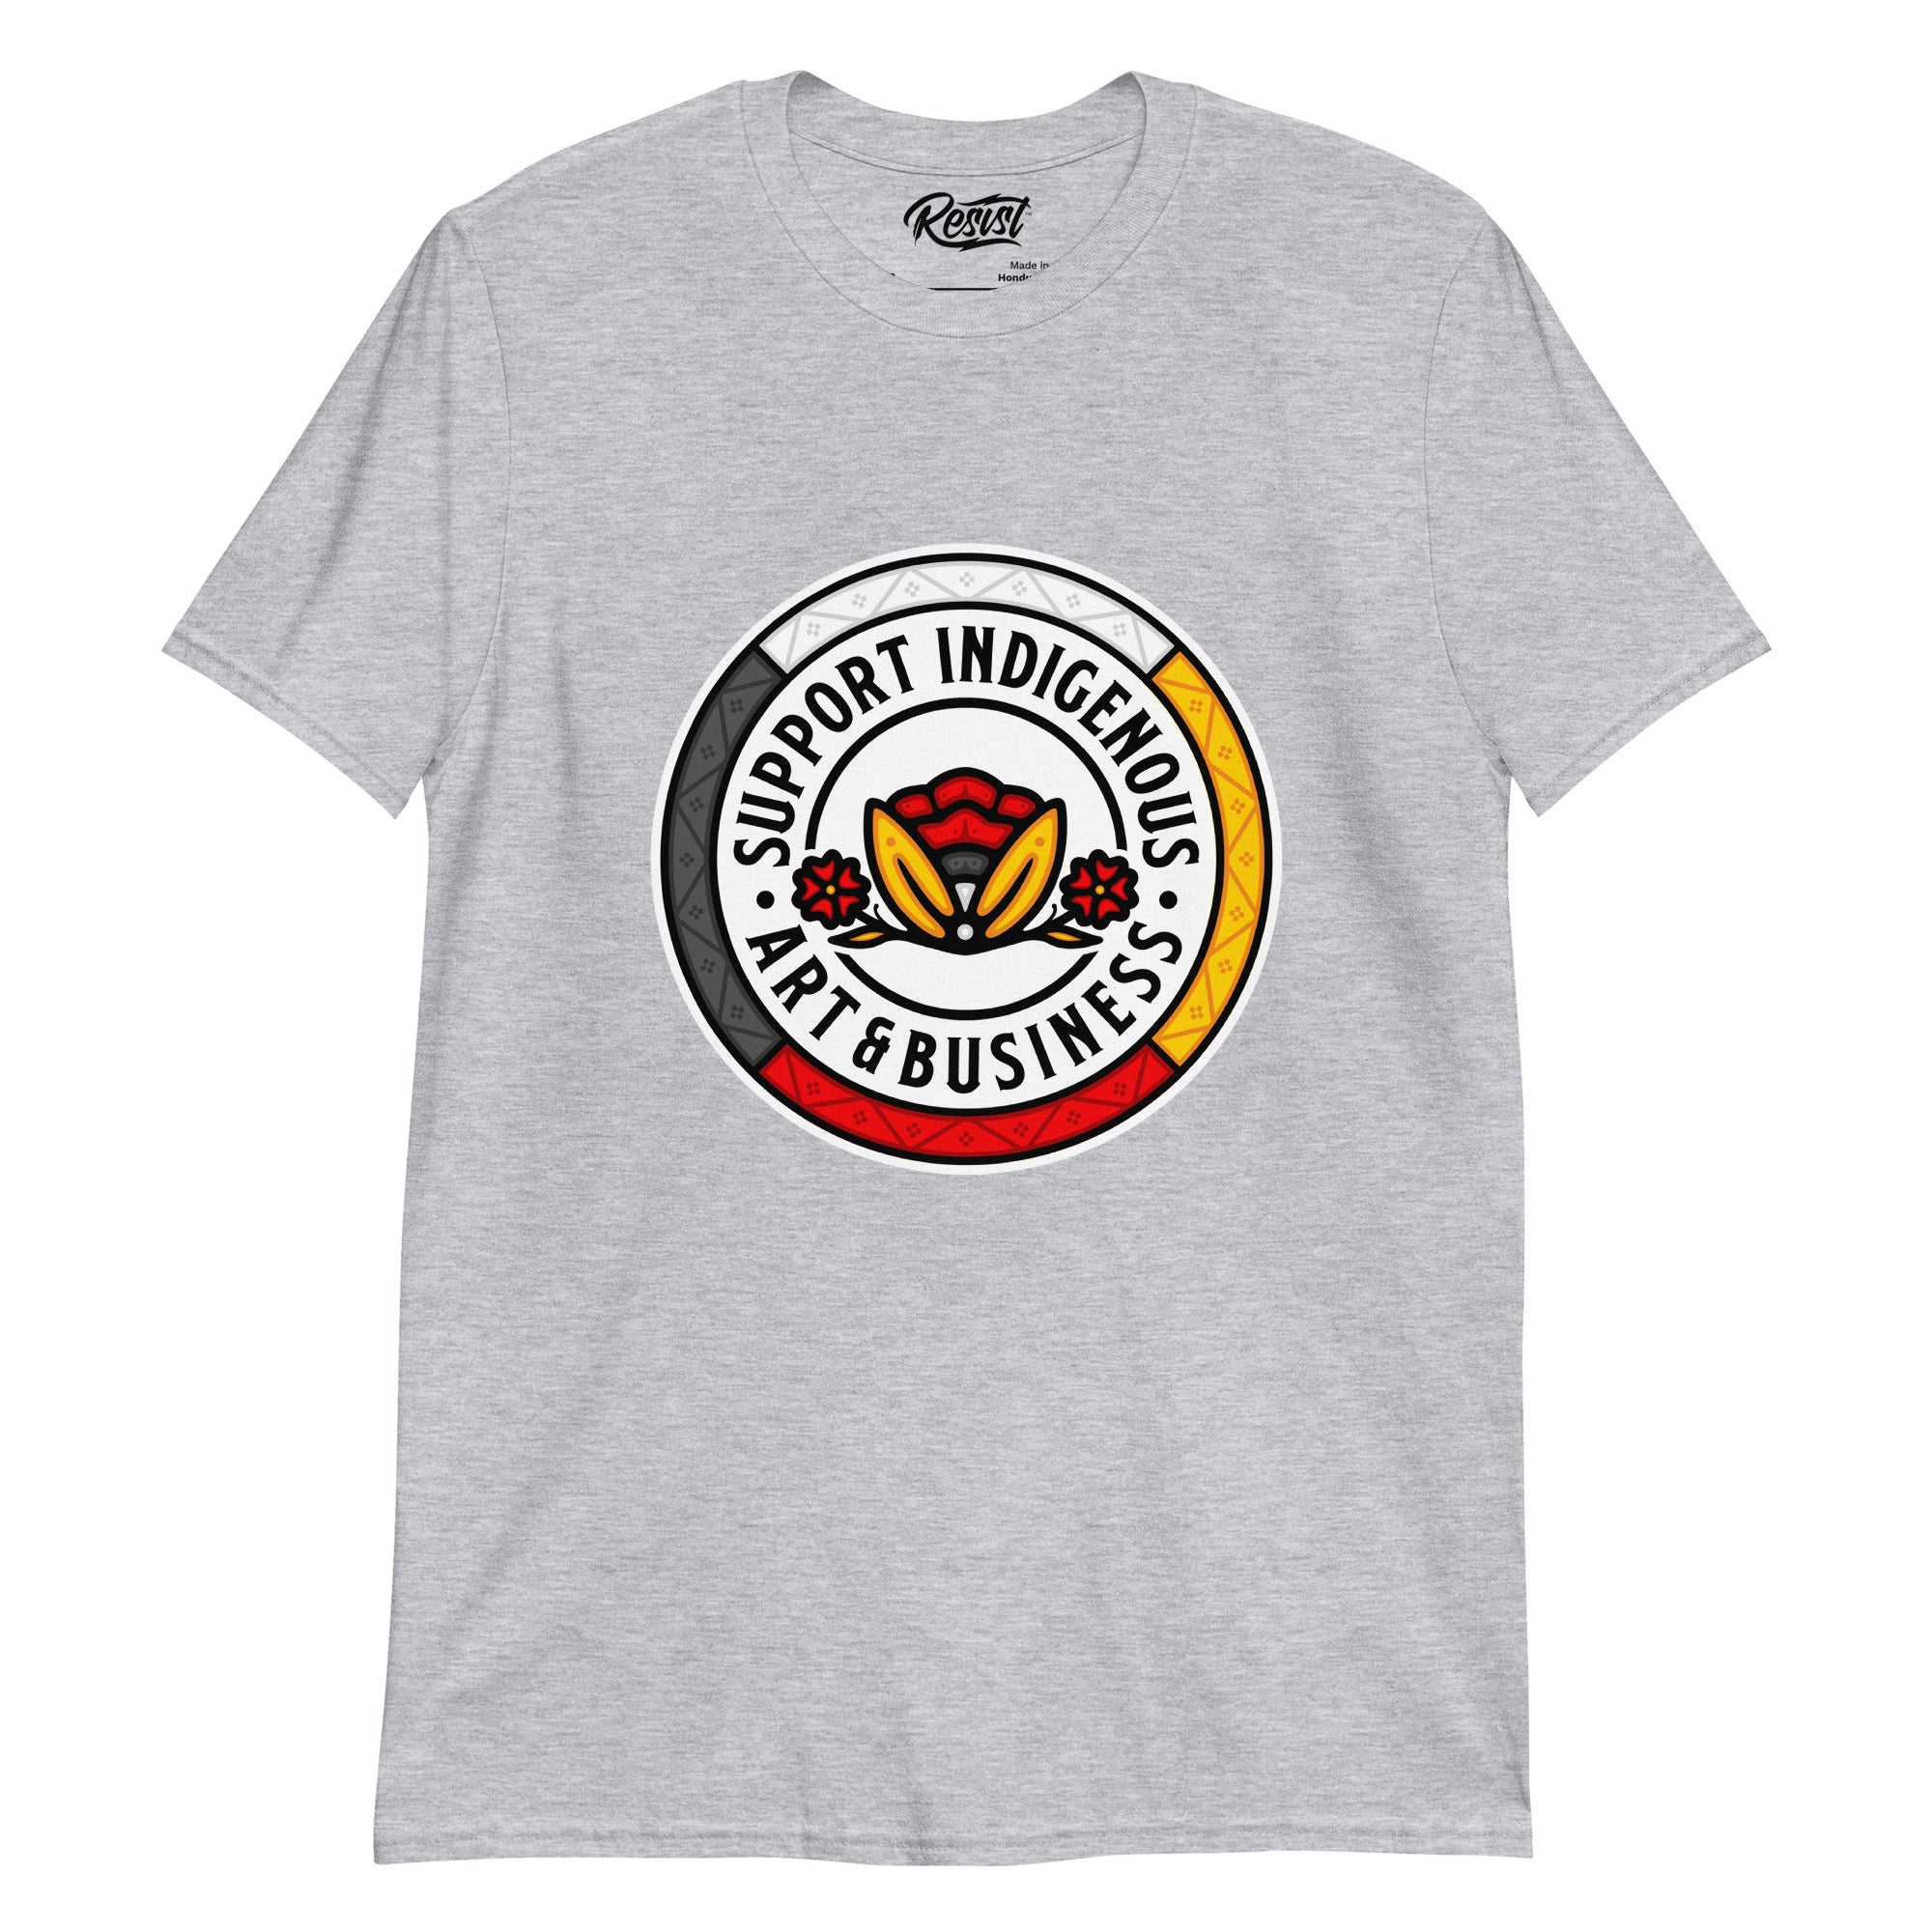 Support Indigenous Art & Business T-Shirt (unisex)